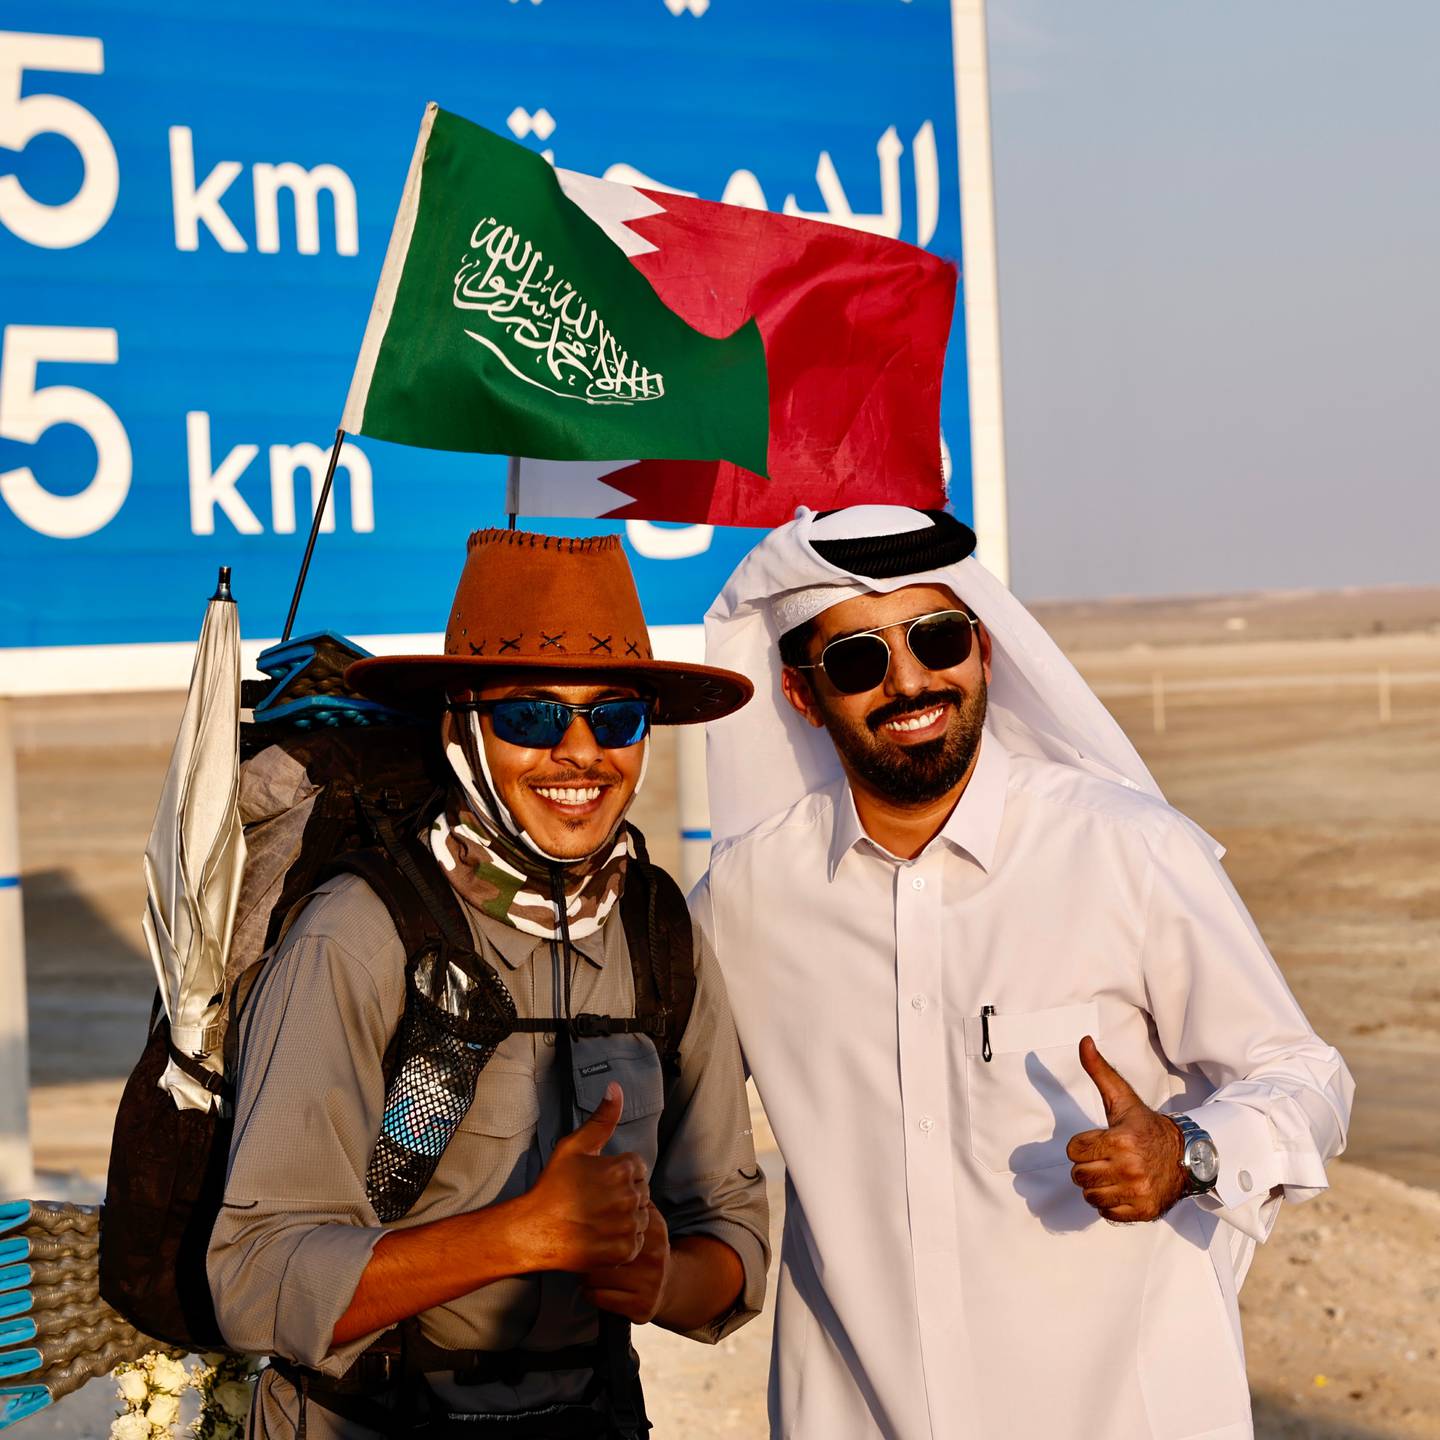 Abdullah Al Sulmi said the trek was a good experience as he met many people on the way. Photo: Abdullah Al Sulmi